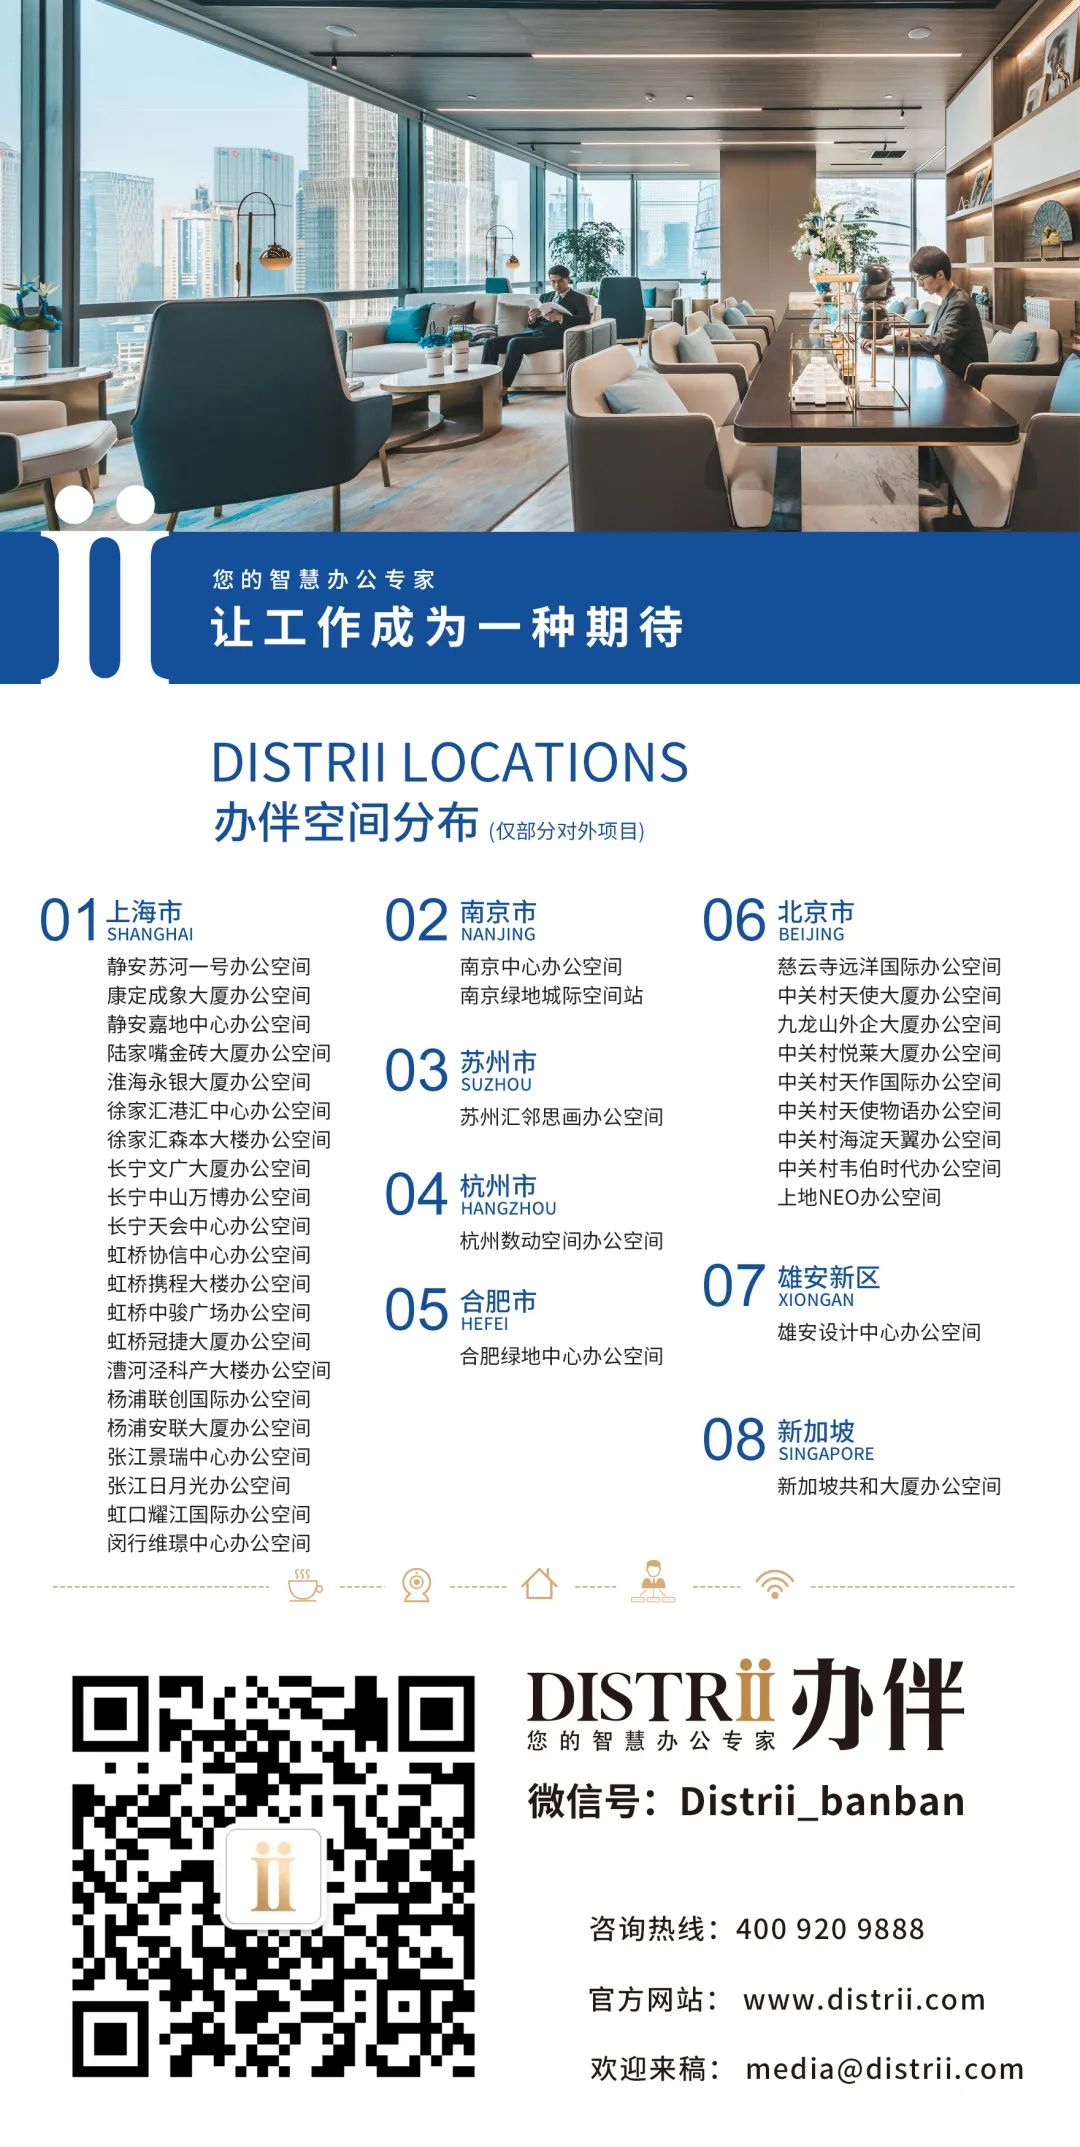 Distrii办伴联手新加坡知名房企吉宝置业，打造中国硅谷智慧城市更新名片(新加坡置业公司)